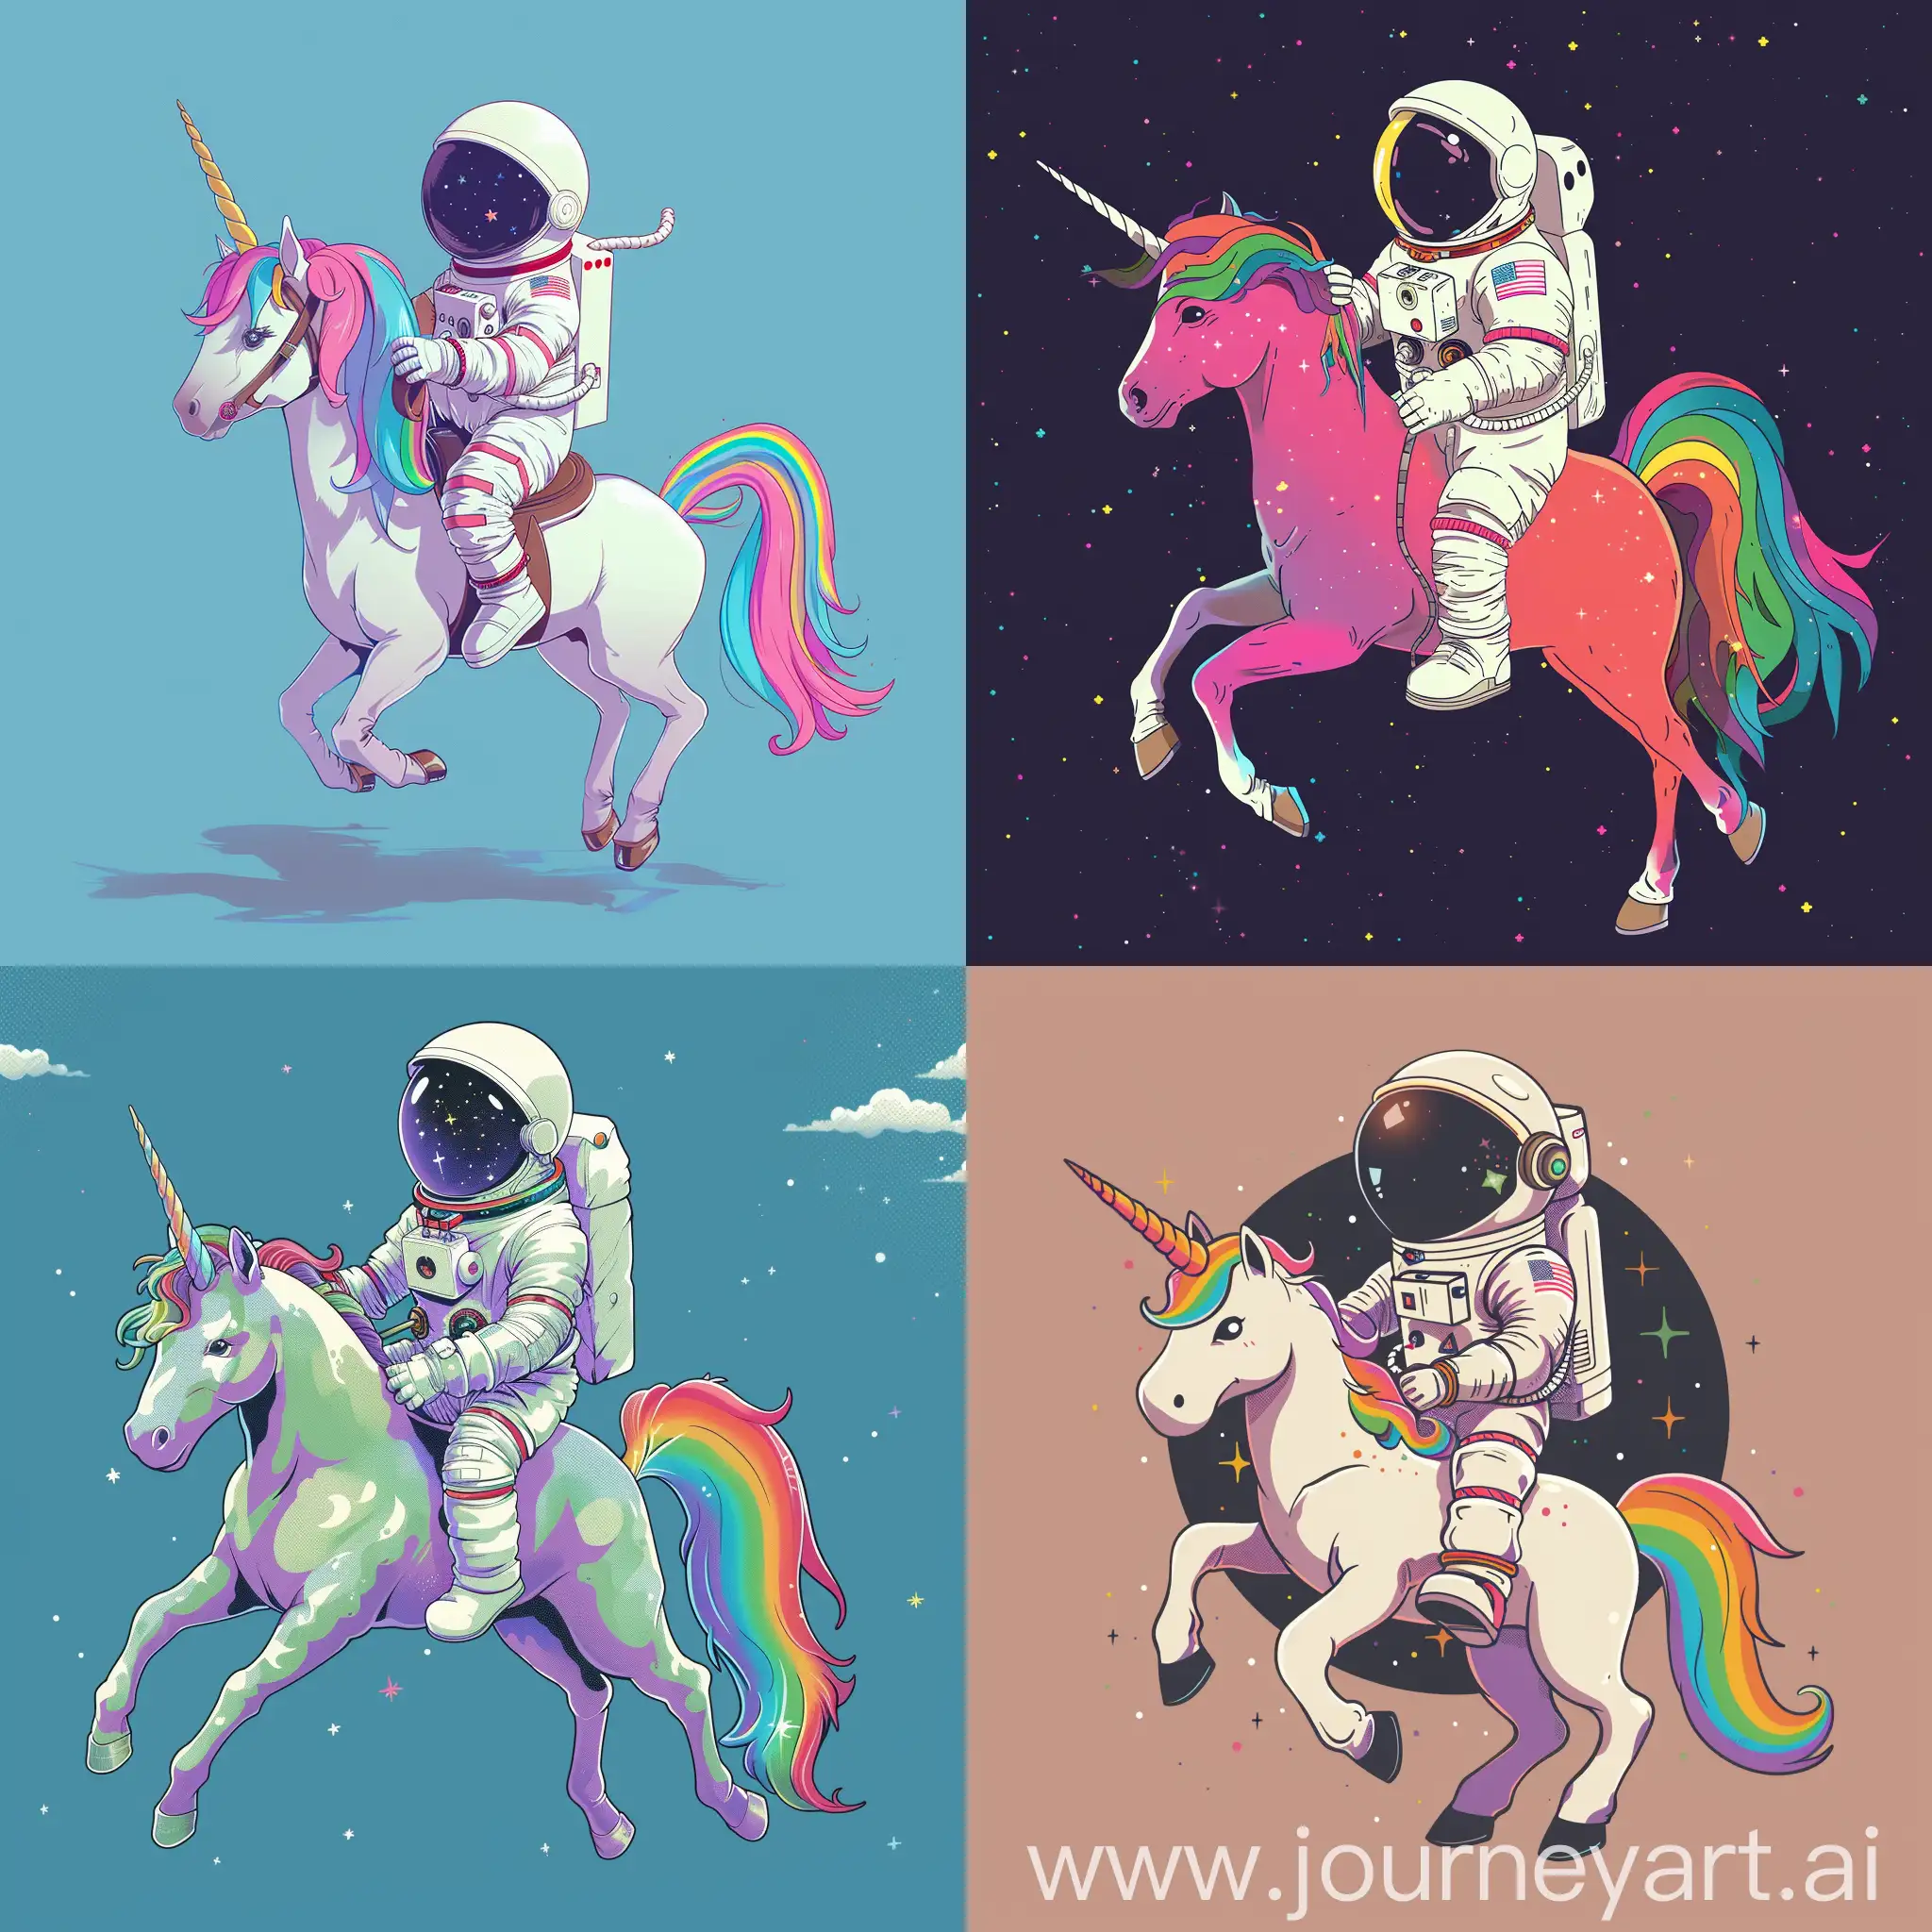 Astronaut-Riding-Rainbow-Unicorn-Whimsical-Ghiblistyle-Adventure